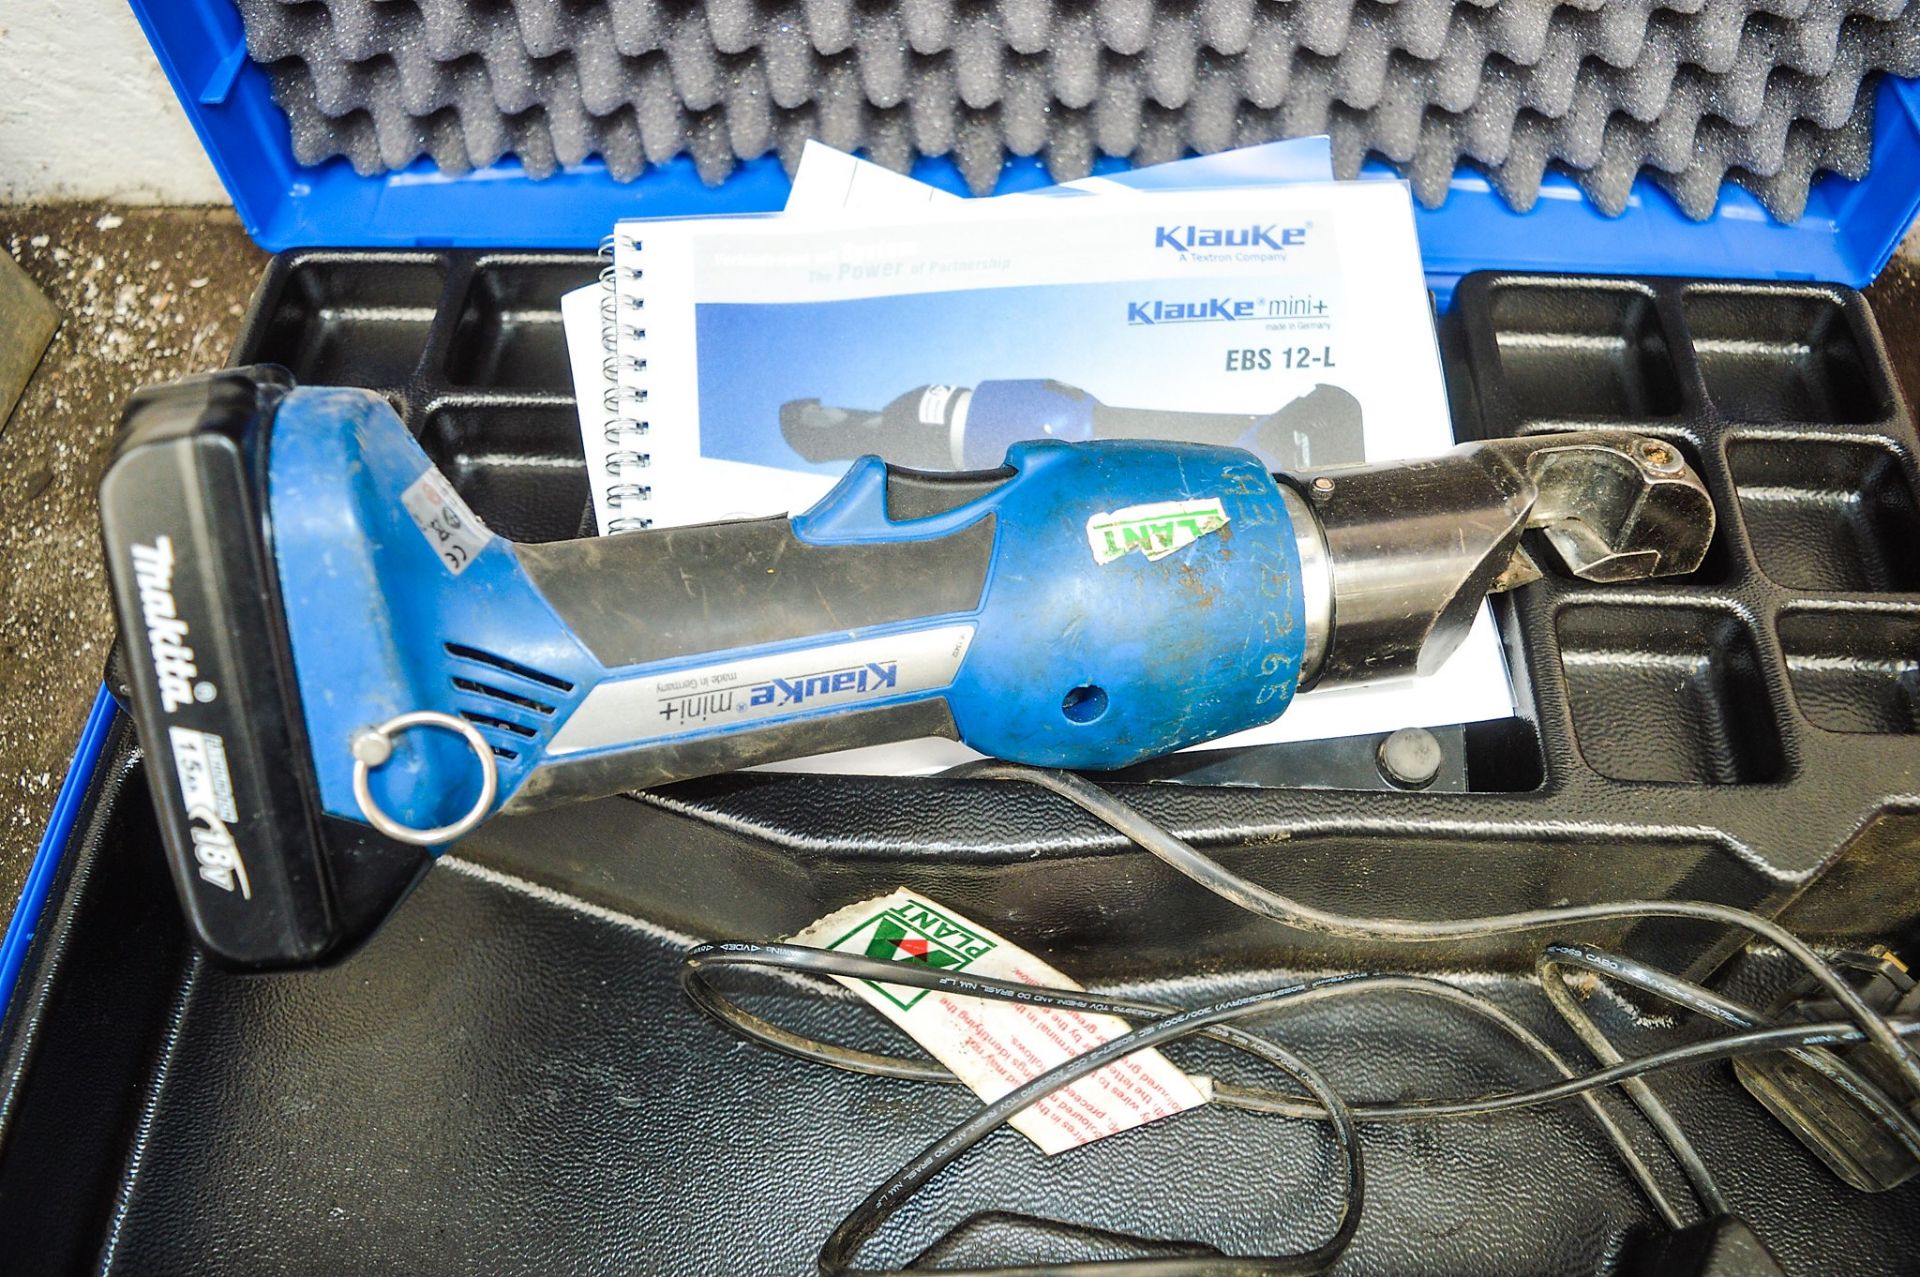 Klauke 18v cordless bolt cutter c/w charger, battery & carry case A375265